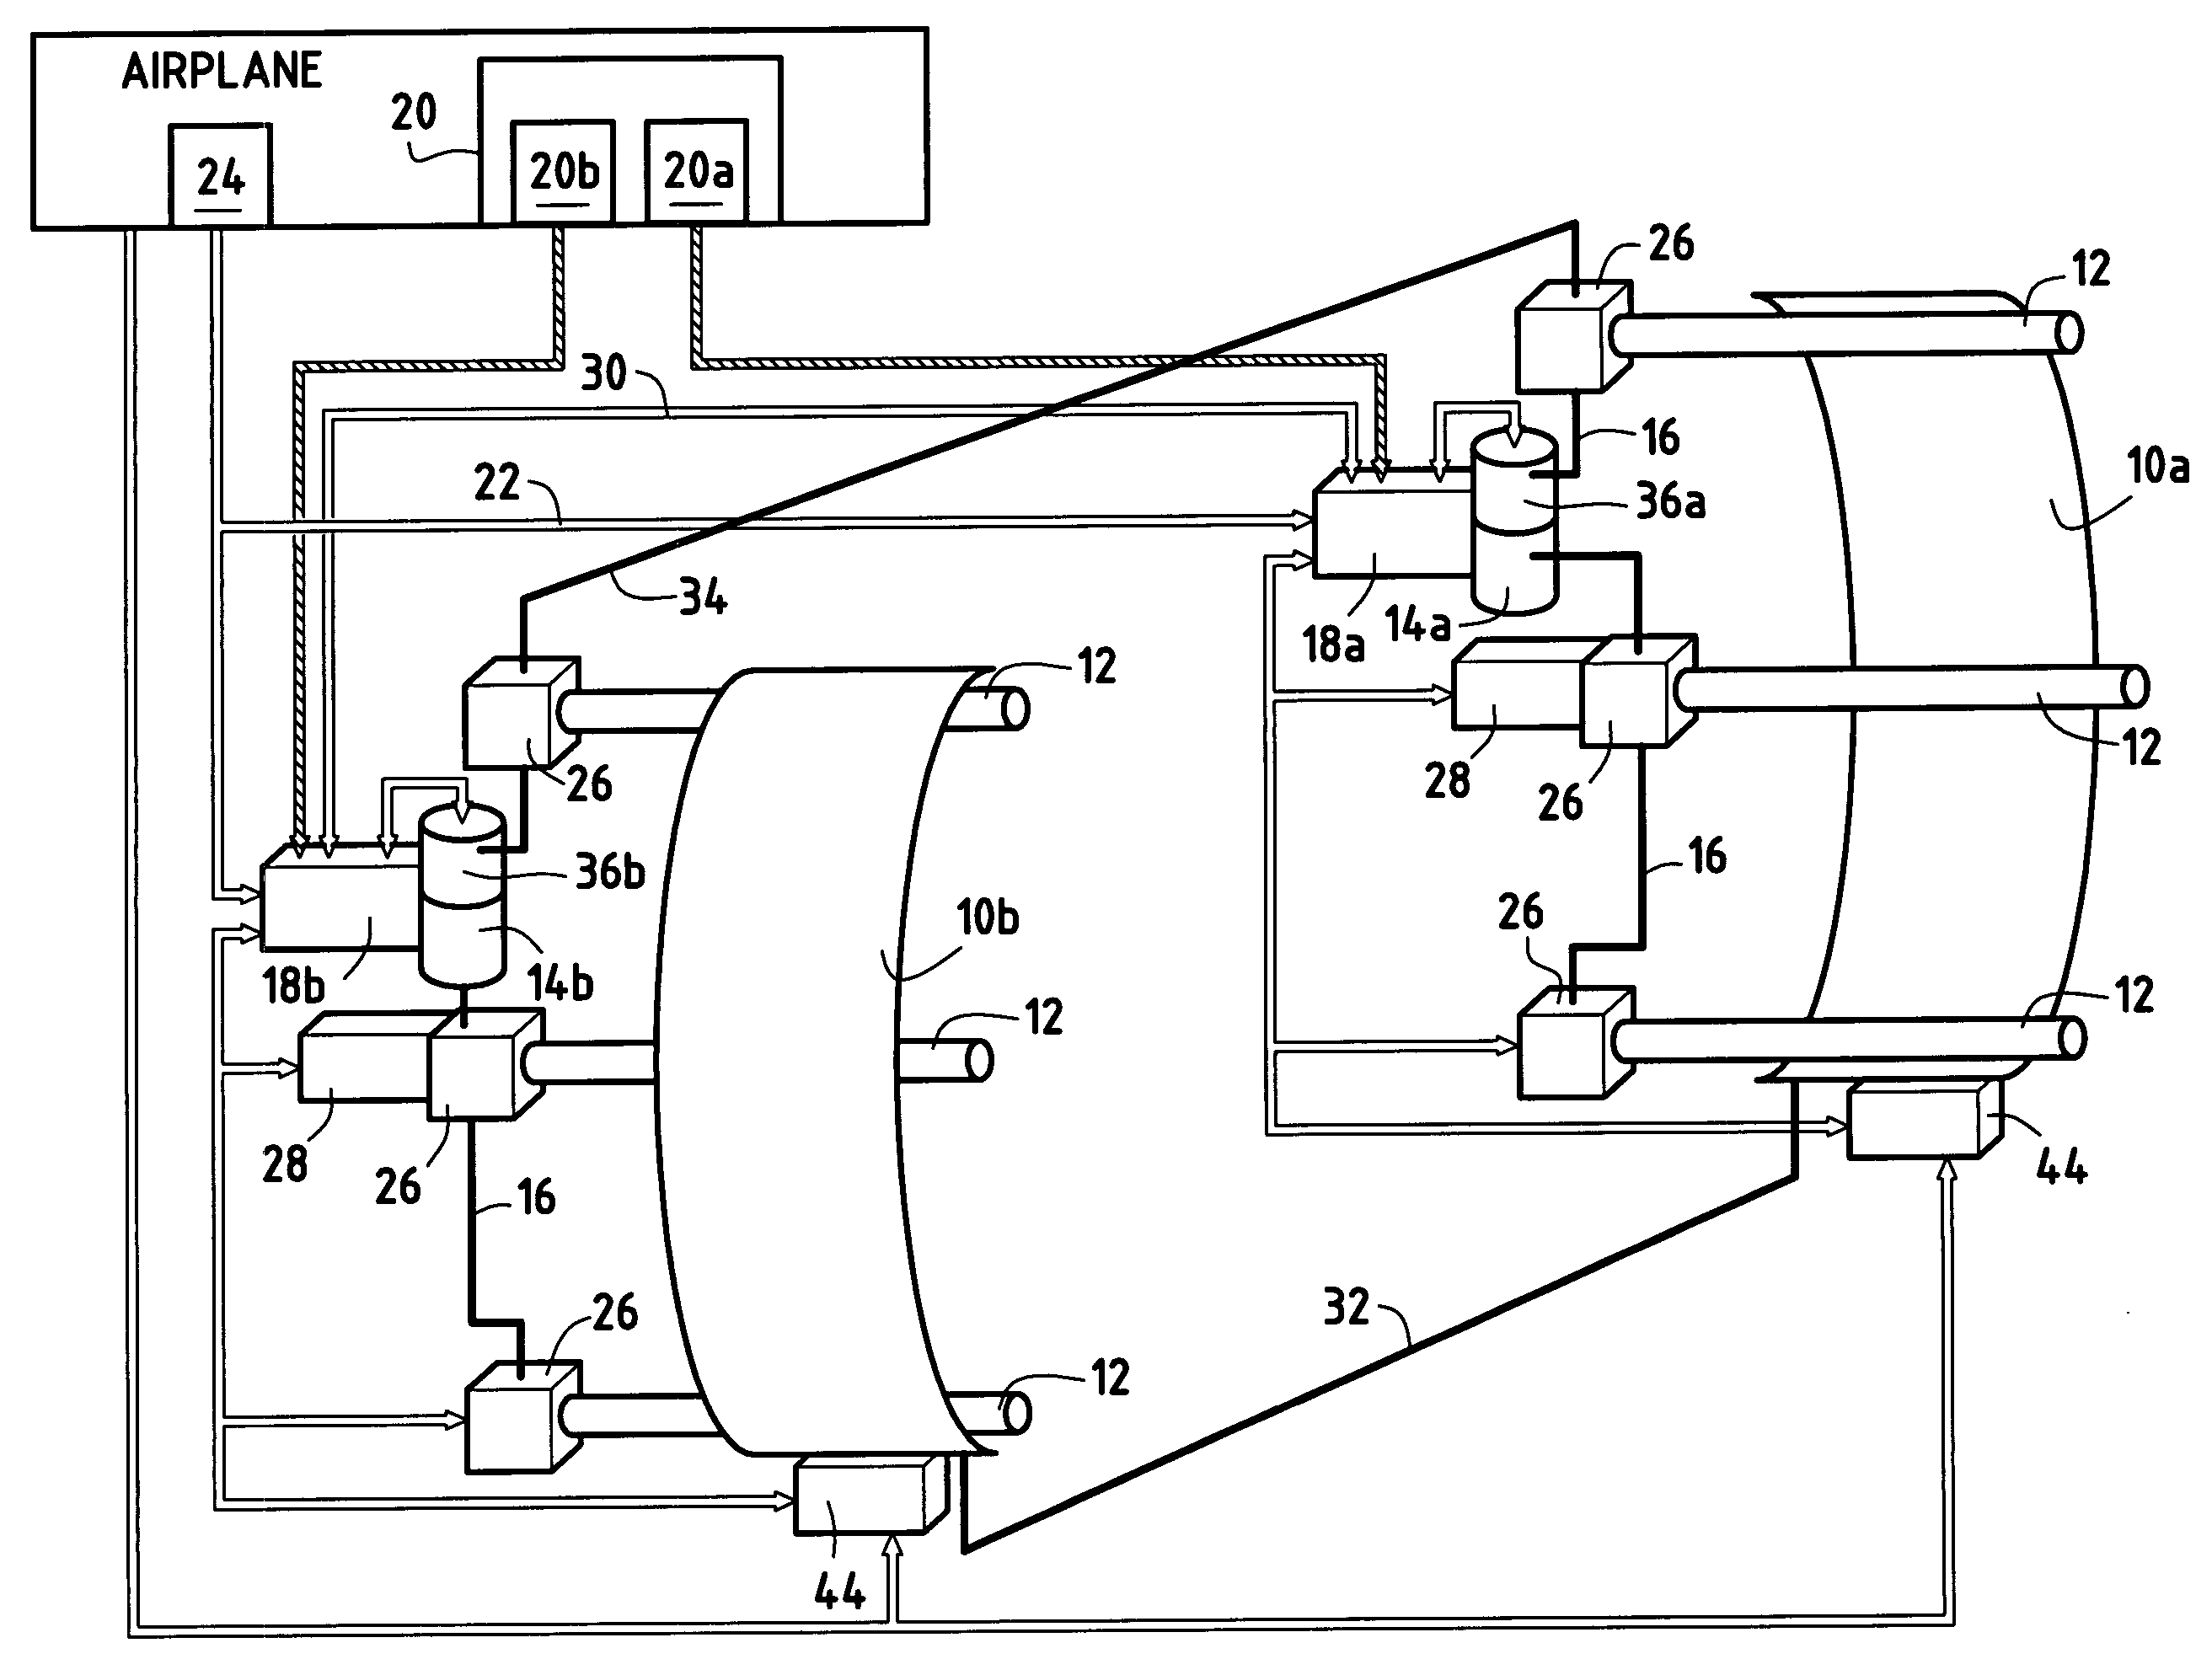 Turbojet electromechanical thrust reverser with synchronized locking devices